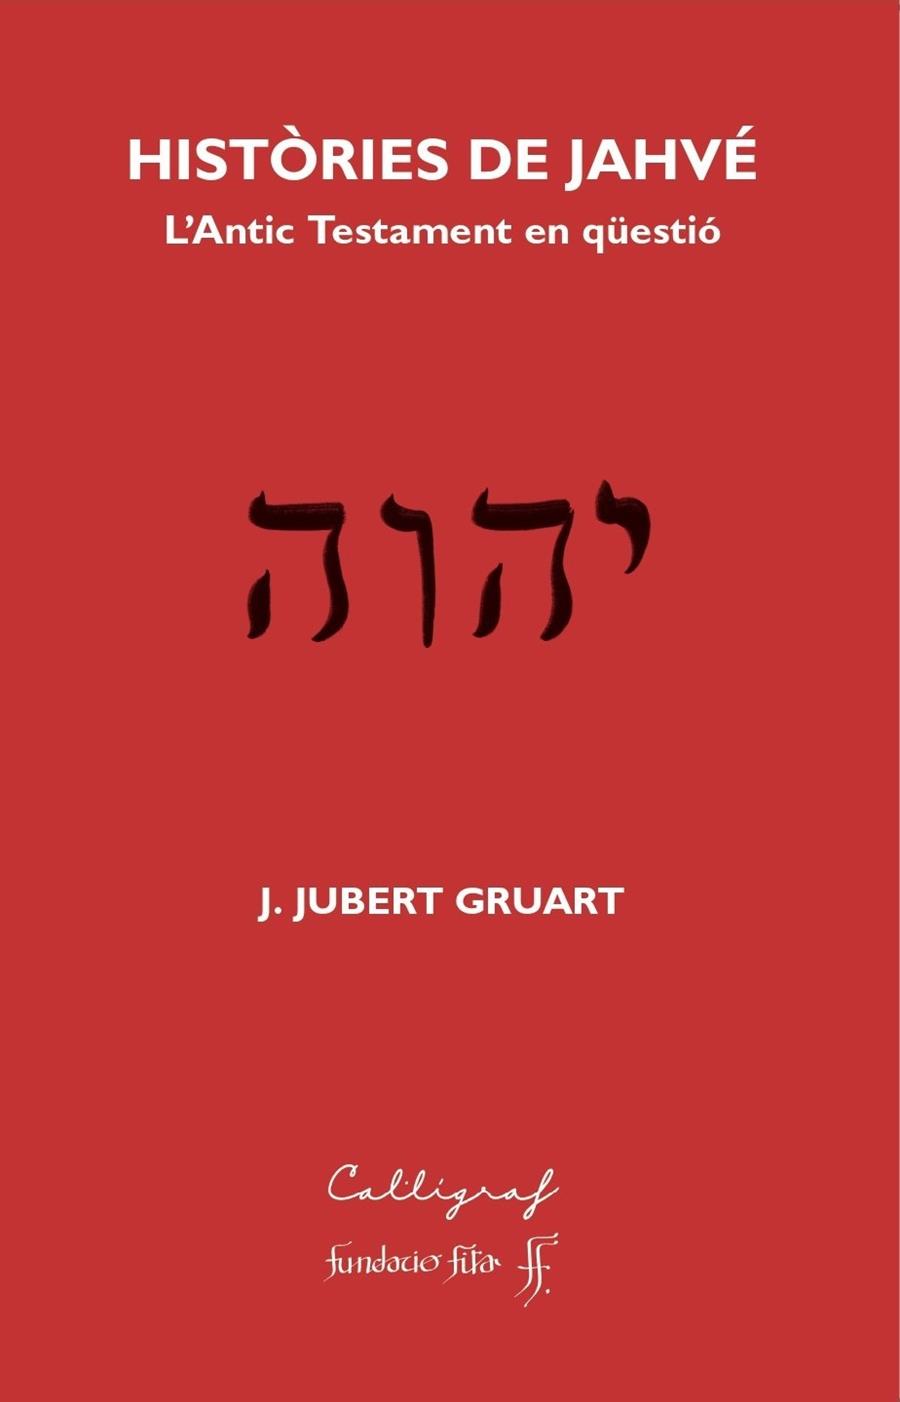 HISTORIES DE JAHVE | 9788412759341 | JOAUIM JUBERT GRUART